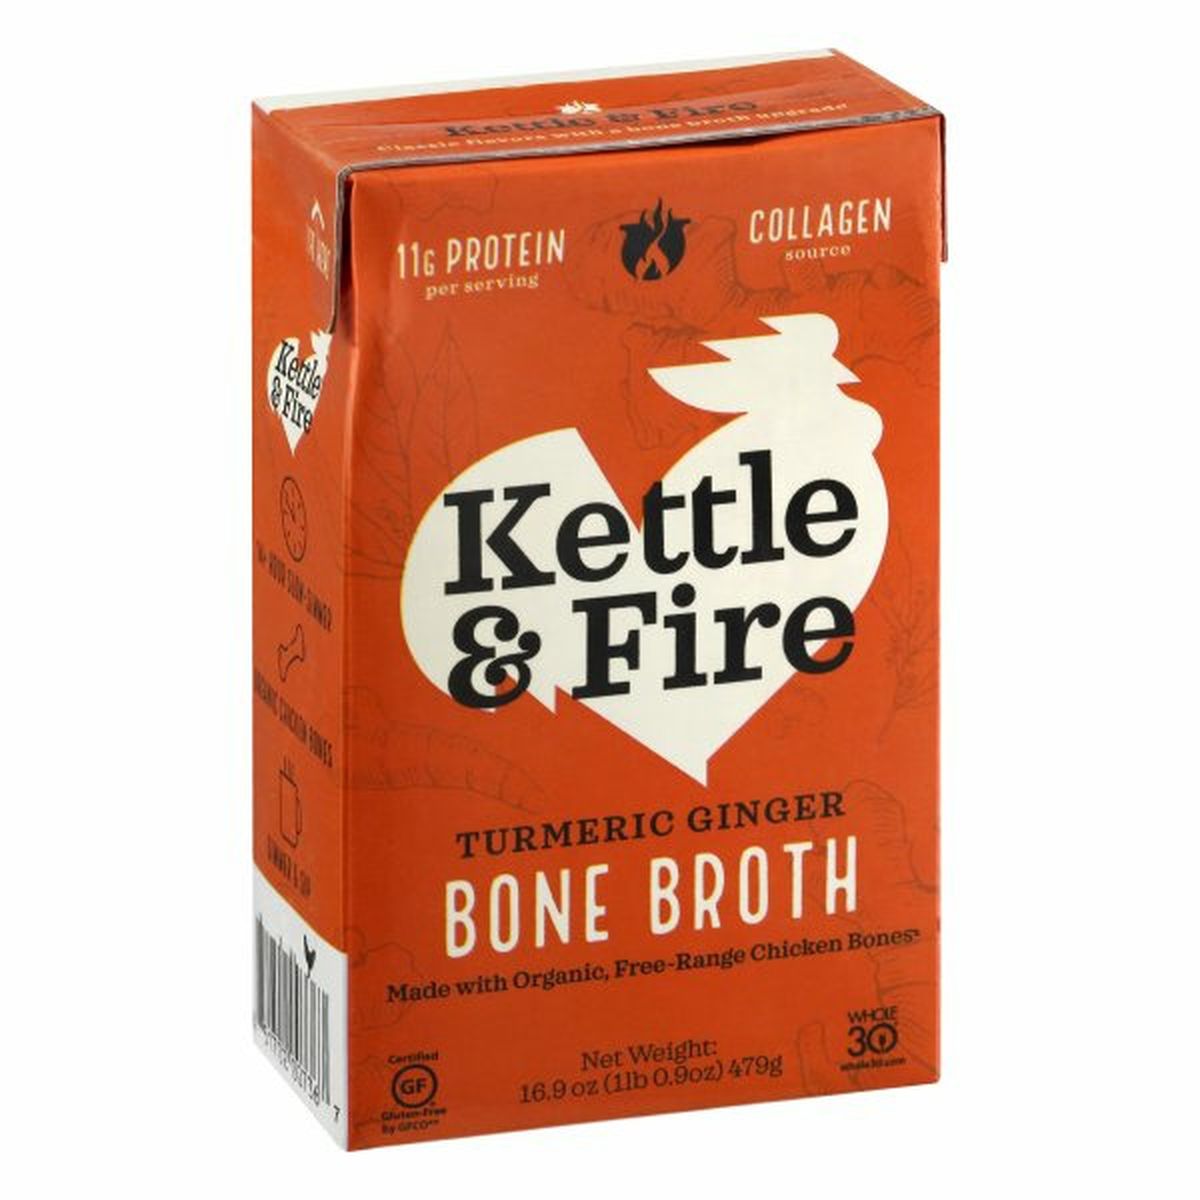 Calories in Kettle & Fire Bone Broth, Turmeric Ginger